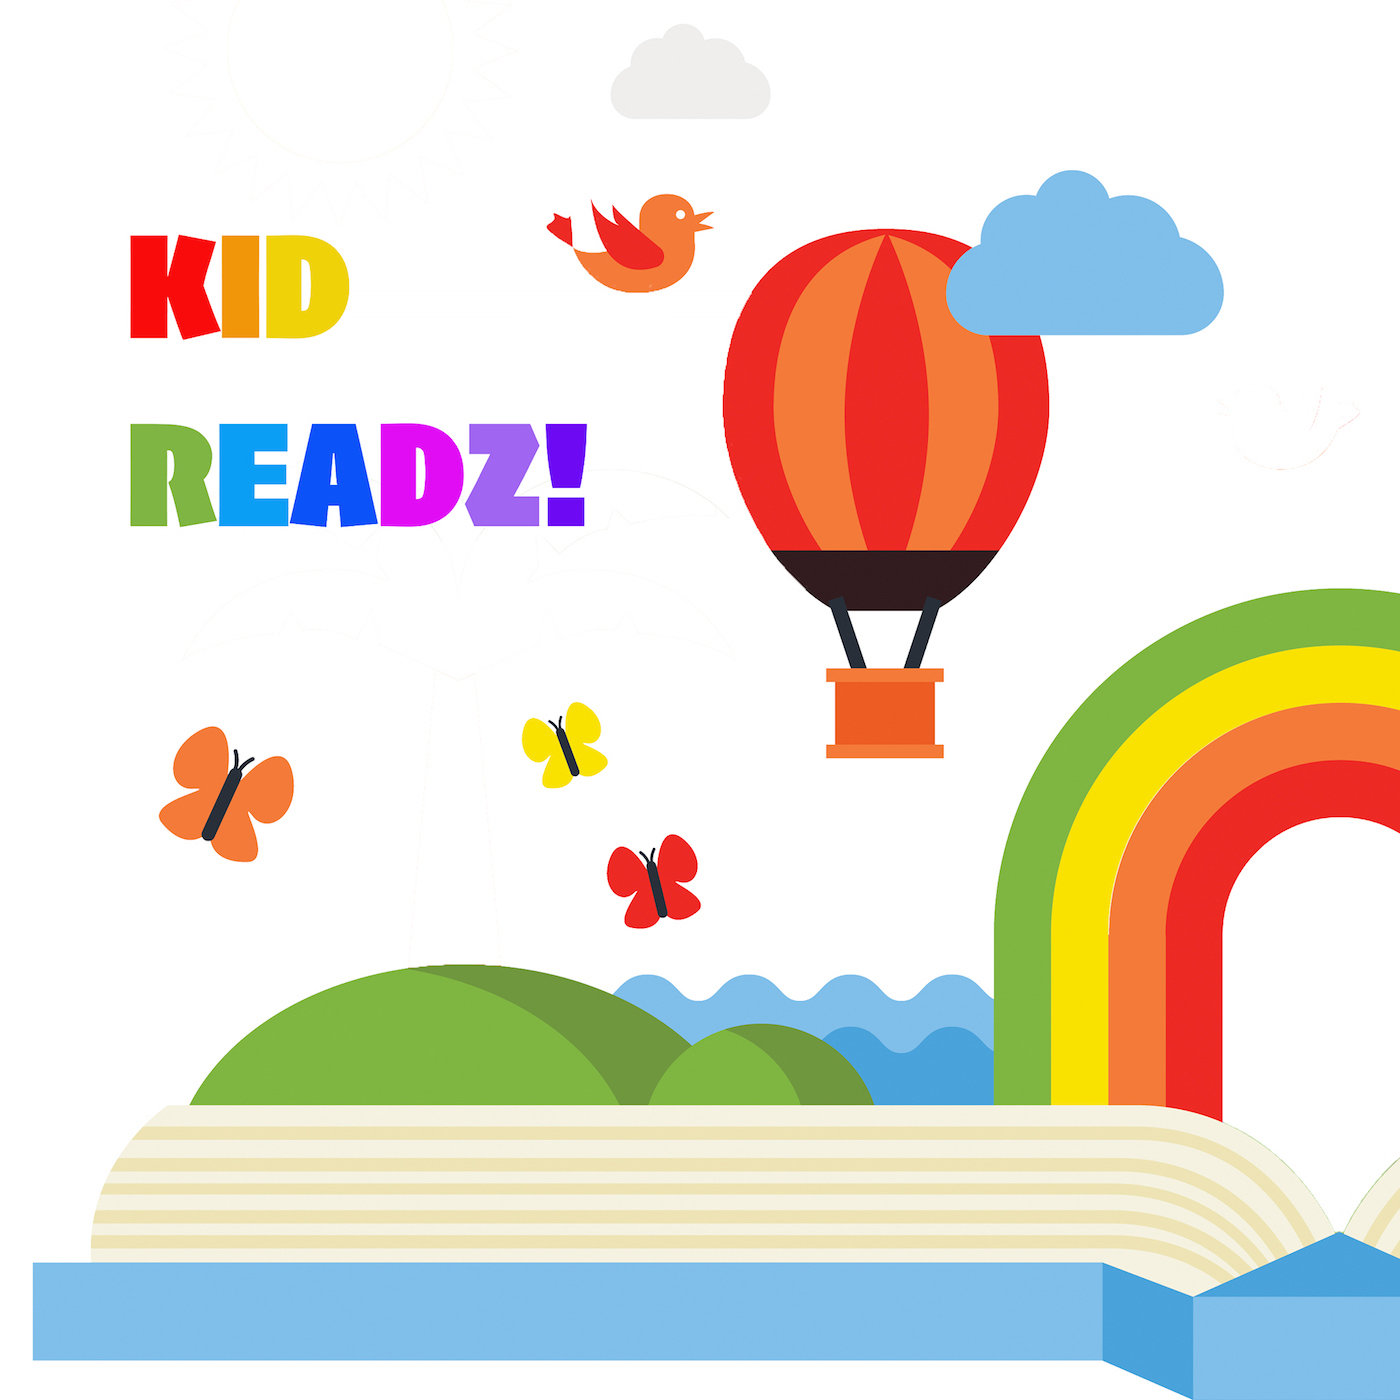 BONUS EPISODE - Kids review their favorite books!